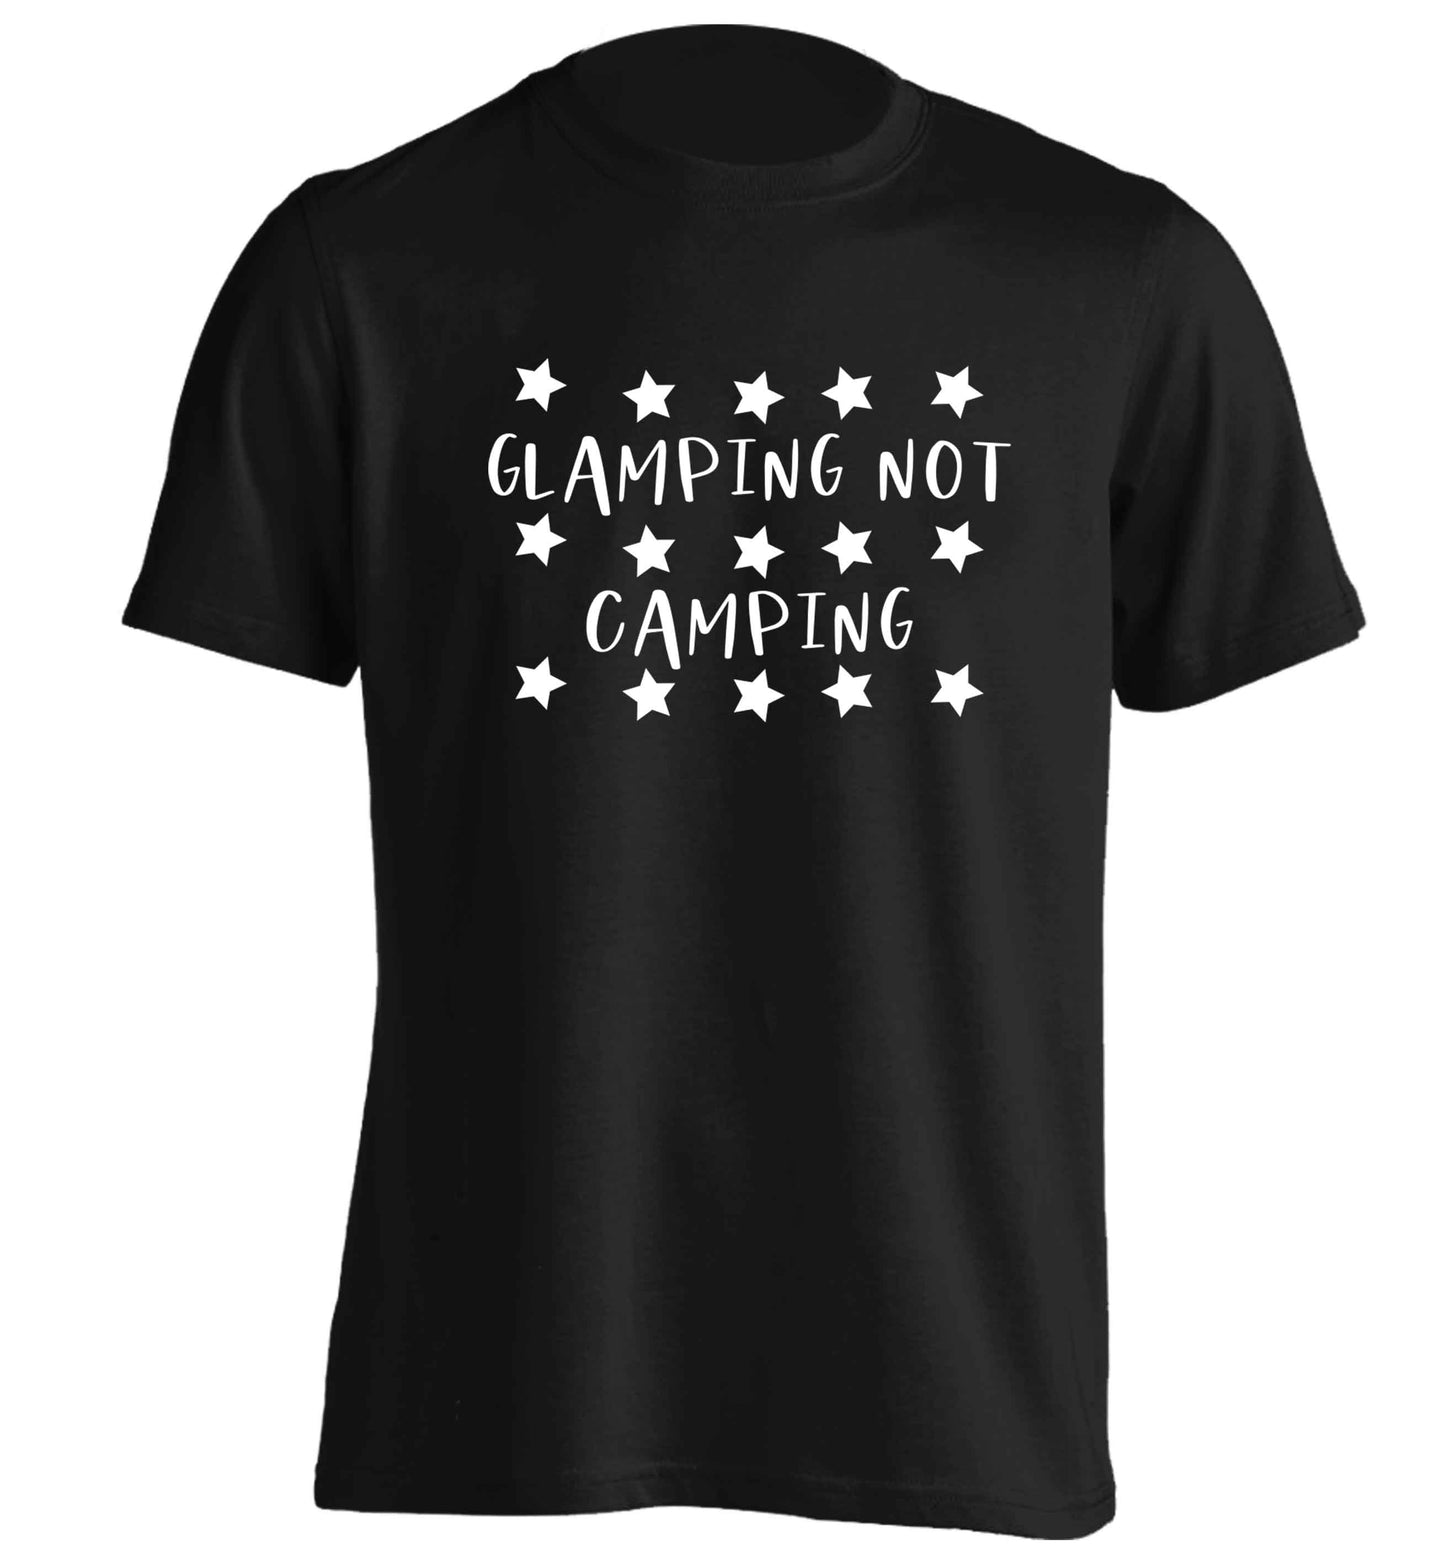 Glamping not camping adults unisex black Tshirt 2XL